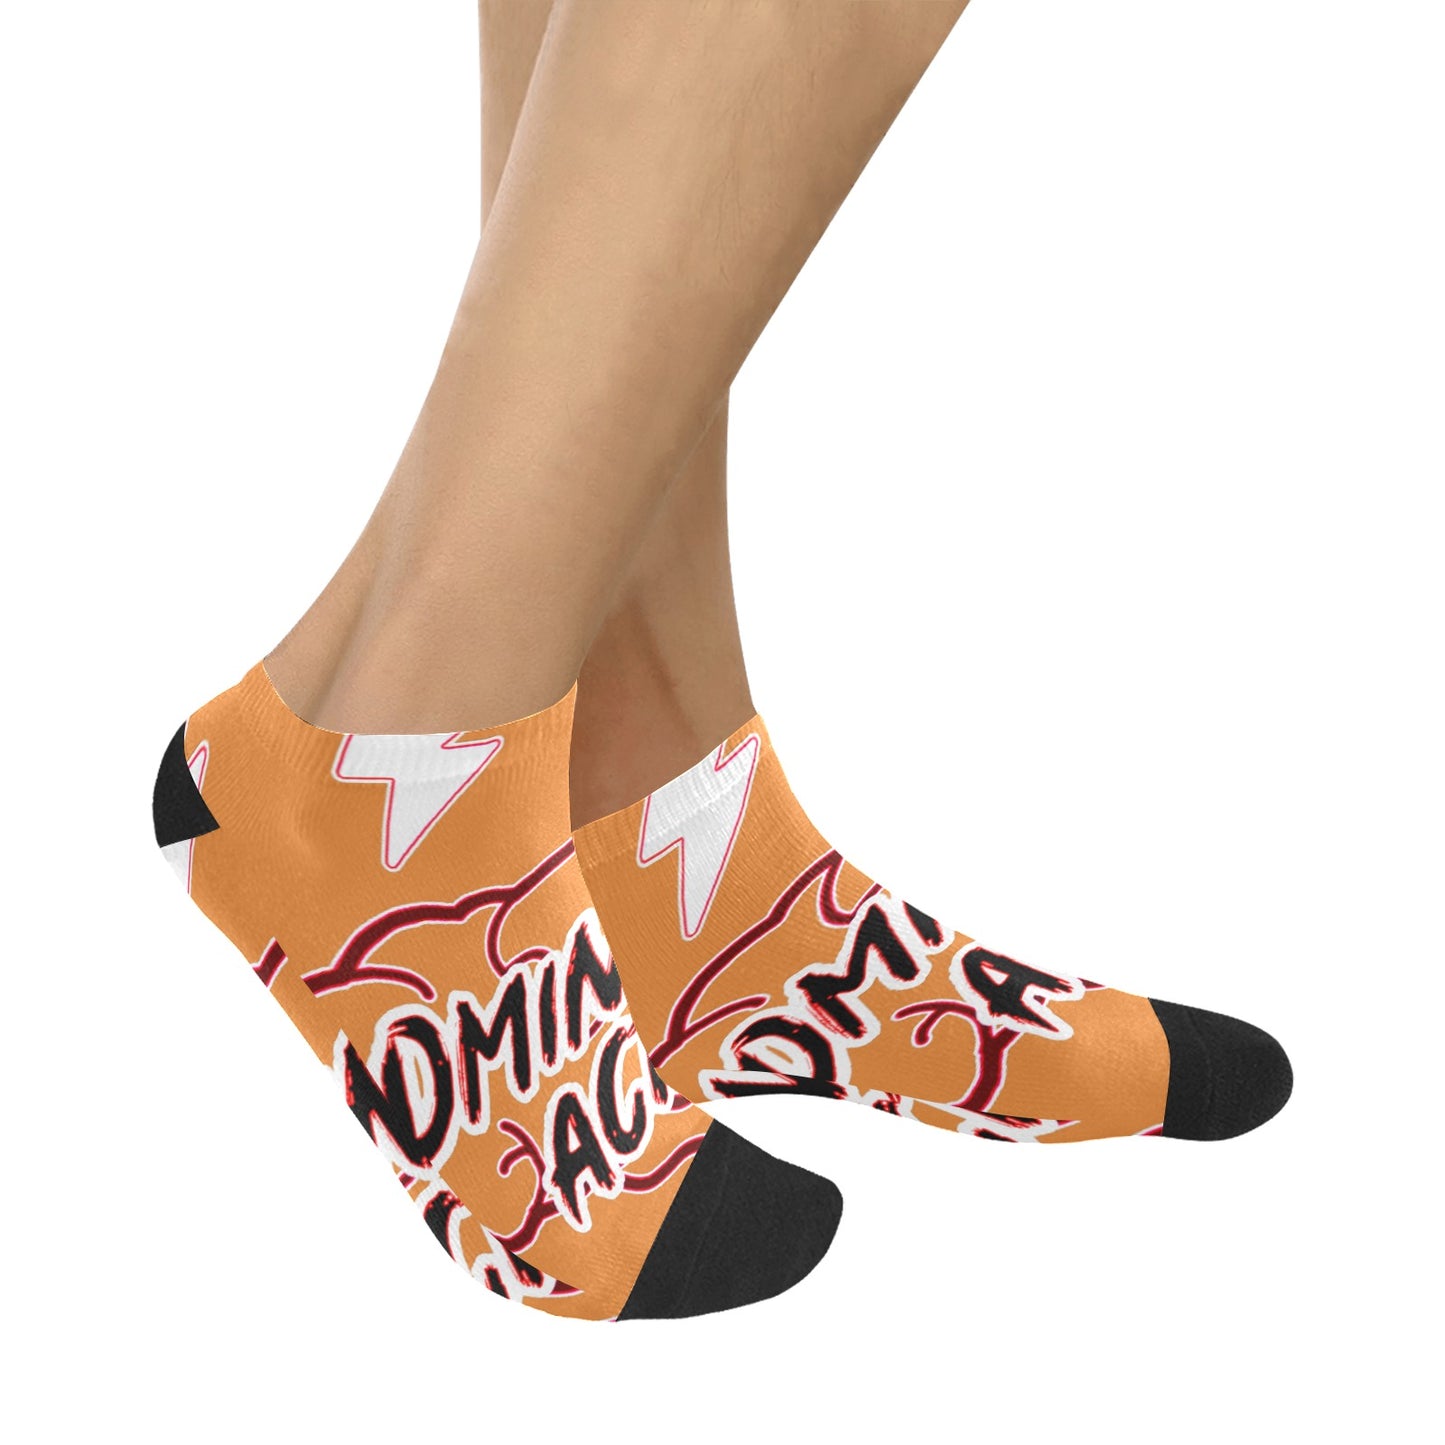 fz men's mind ankle socks one size / fz mind socks - orange men's ankle socks